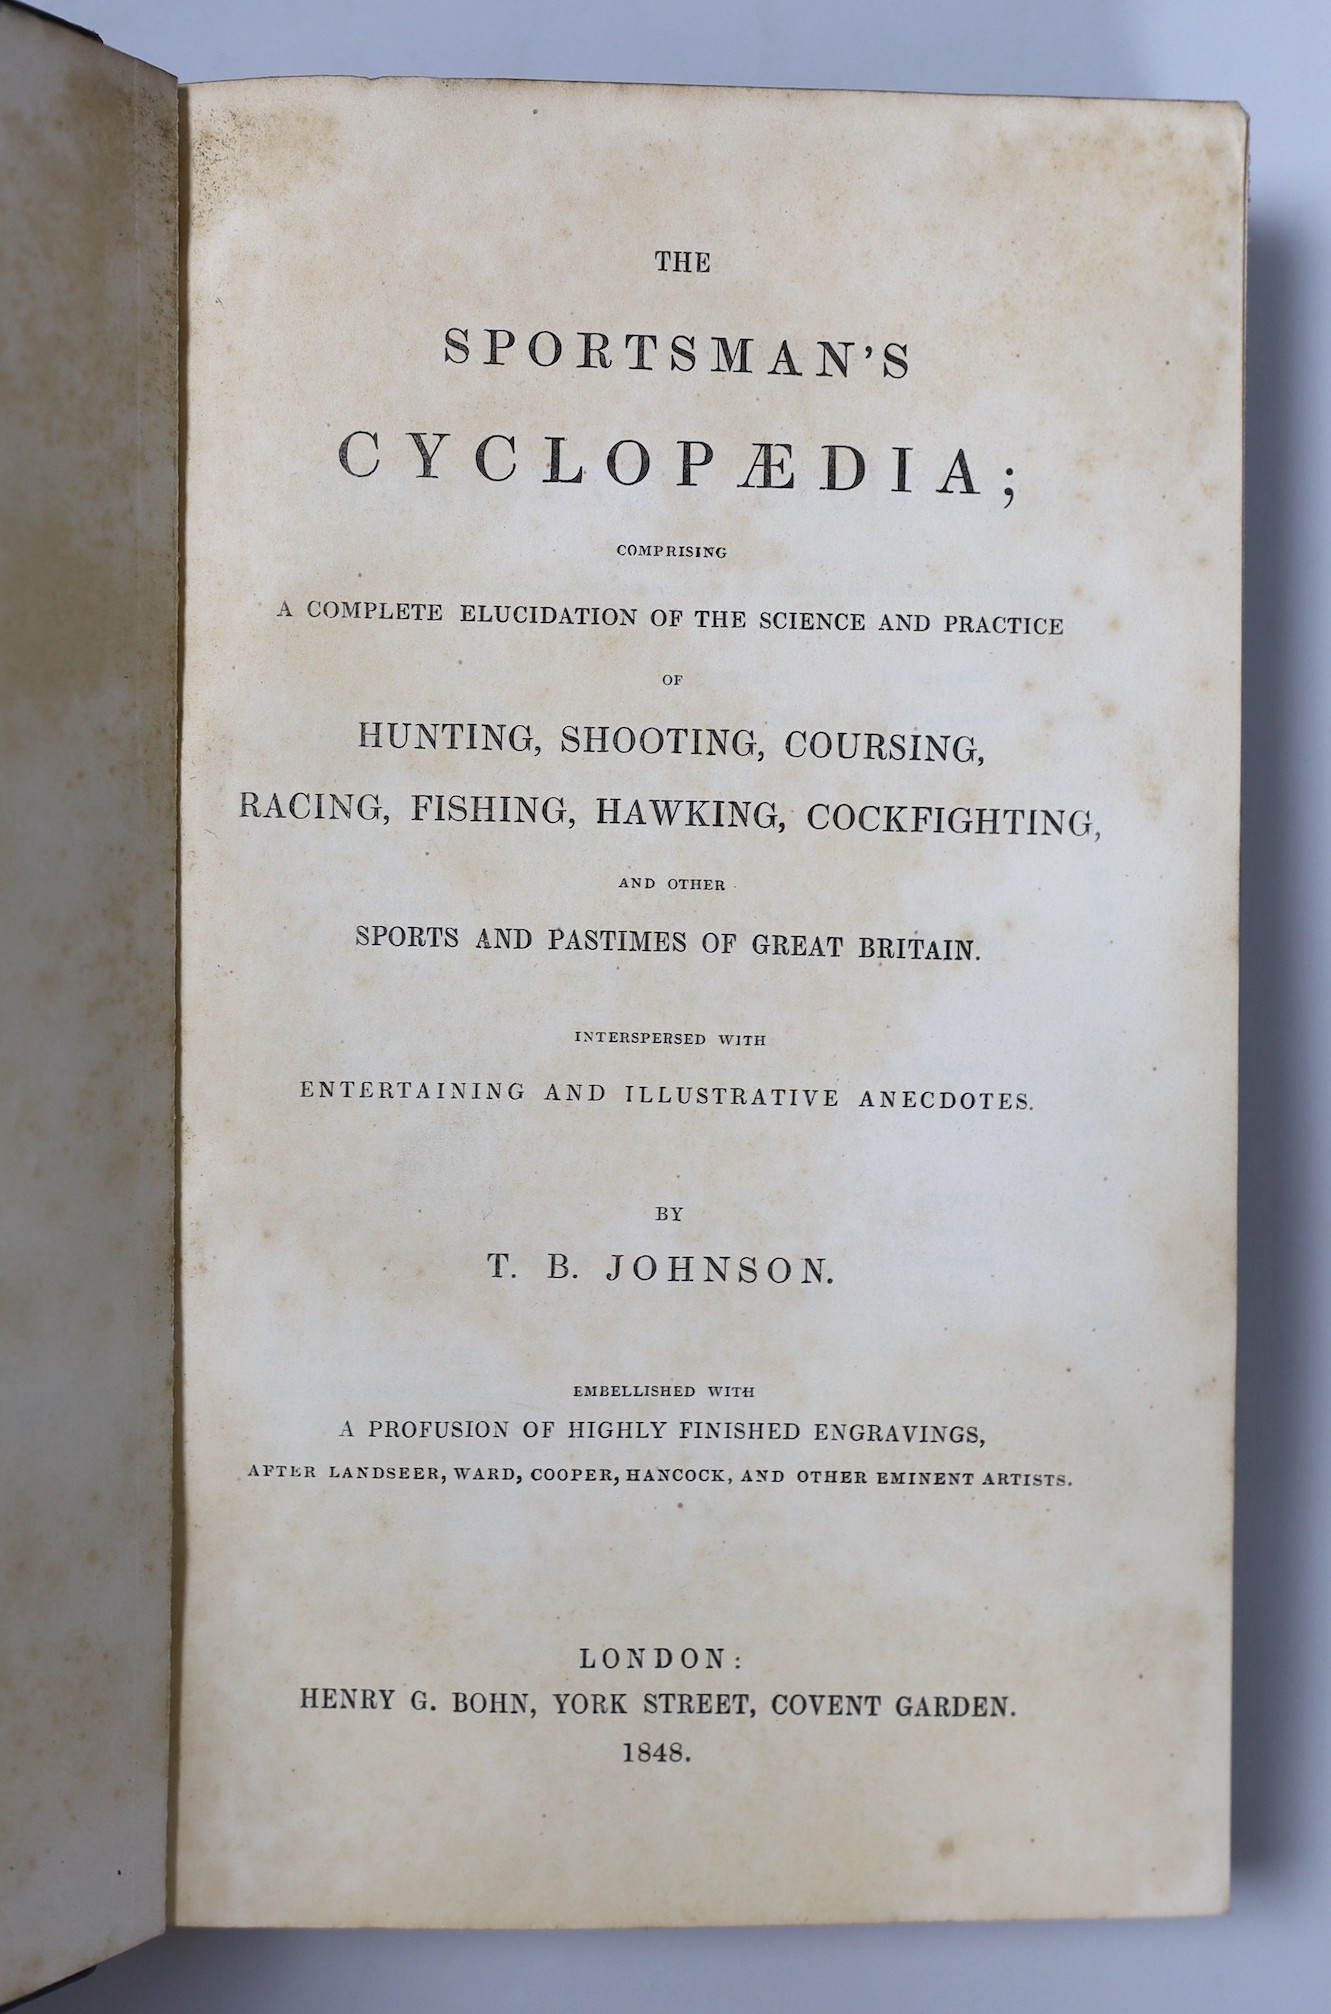 Johnson, Thomas Burgeland - The Sportsman’s Cyclopaedia, 2 vols, 8vo, half calf, Henry G. Born, London,1848